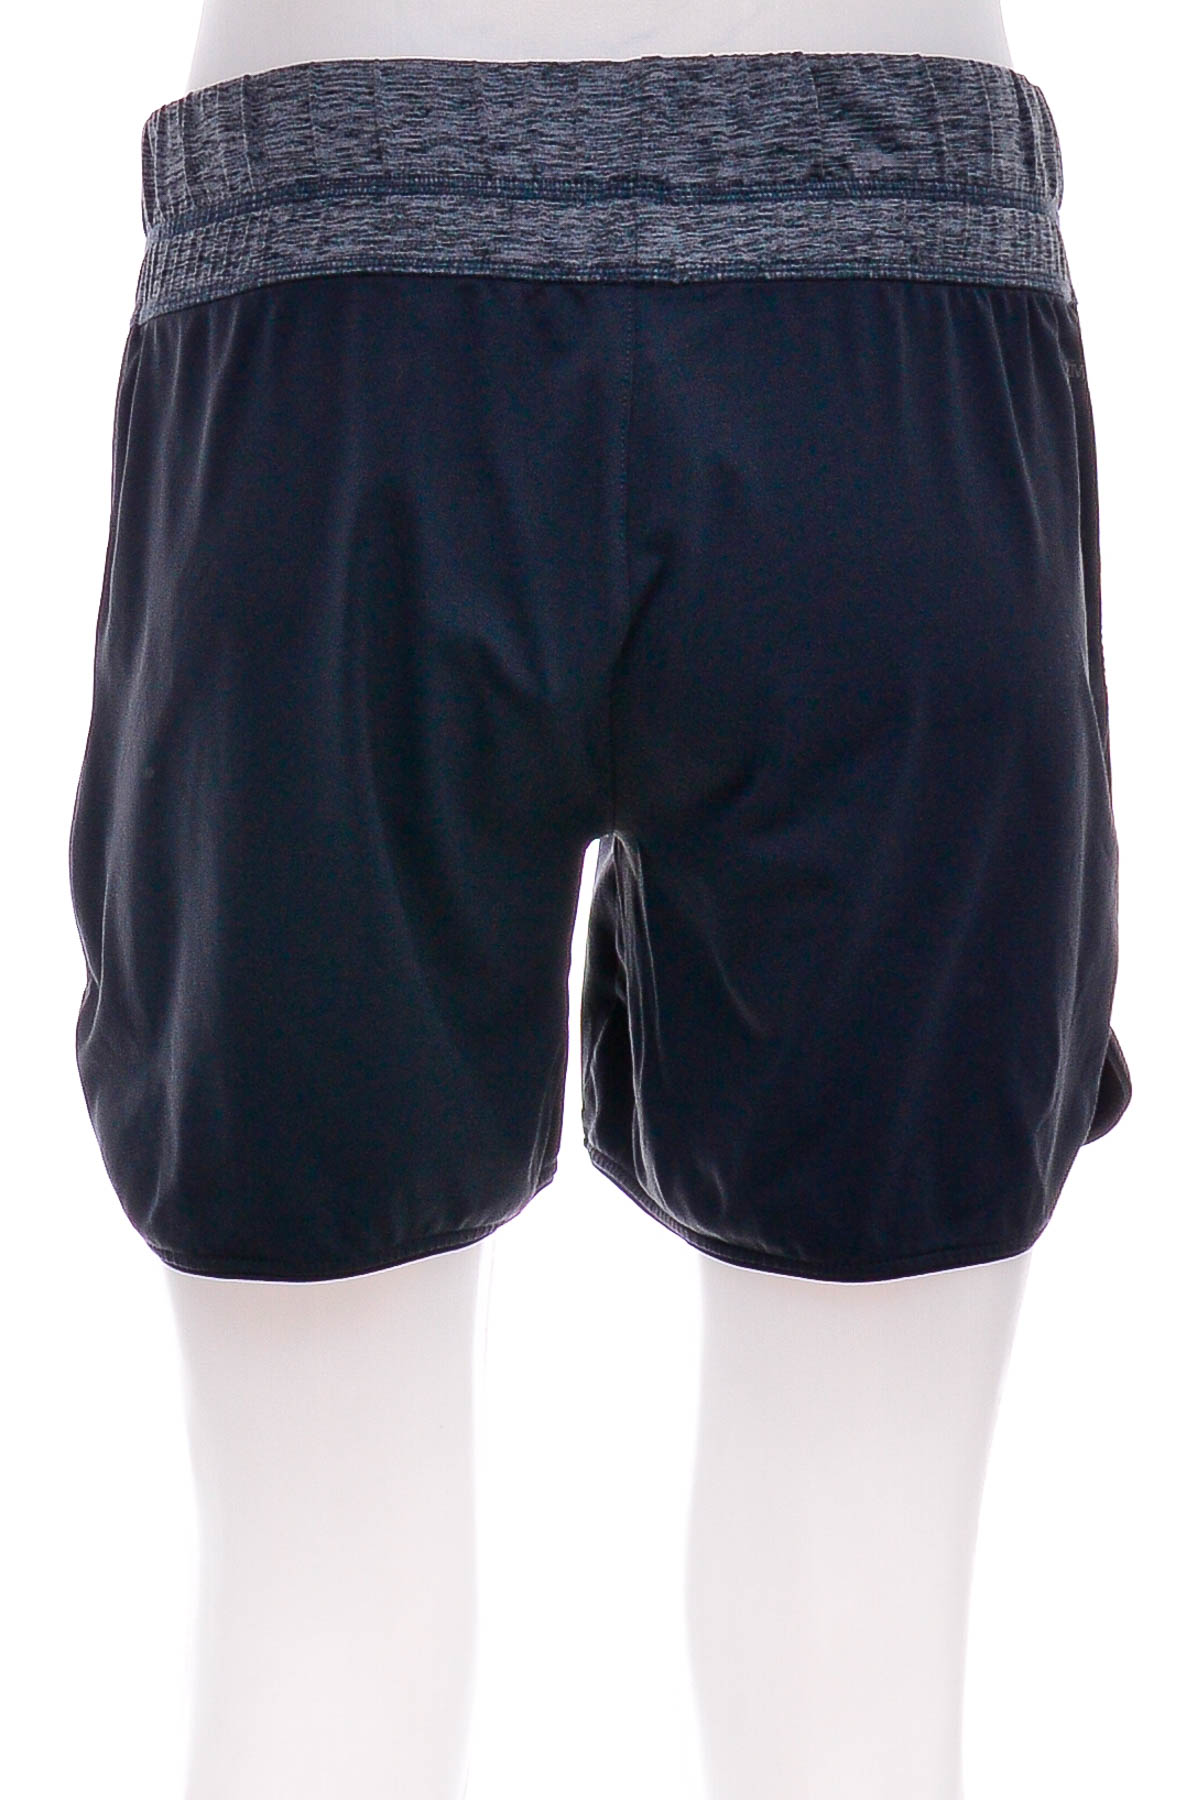 Female shorts - Venice Beach - 1